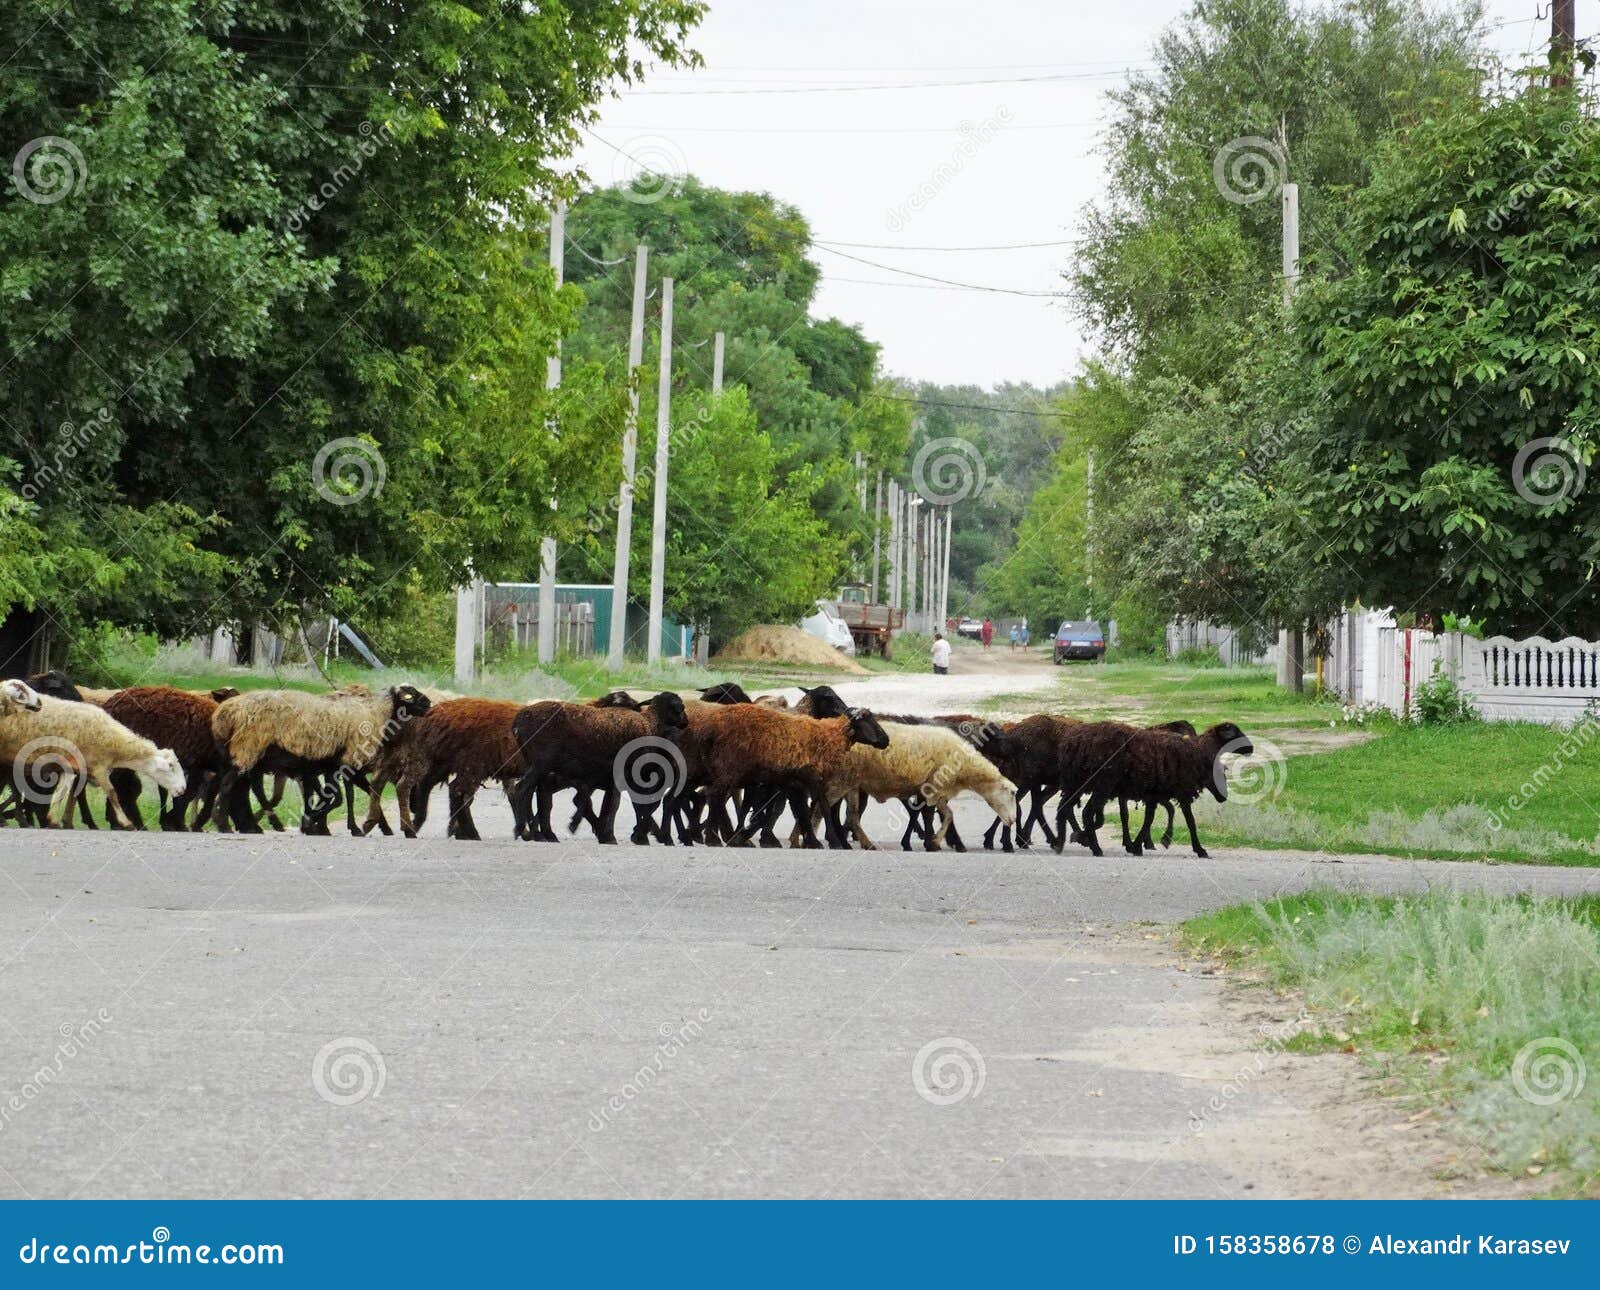 Animals in the village stock photo. Image of graze, farm - 158358678